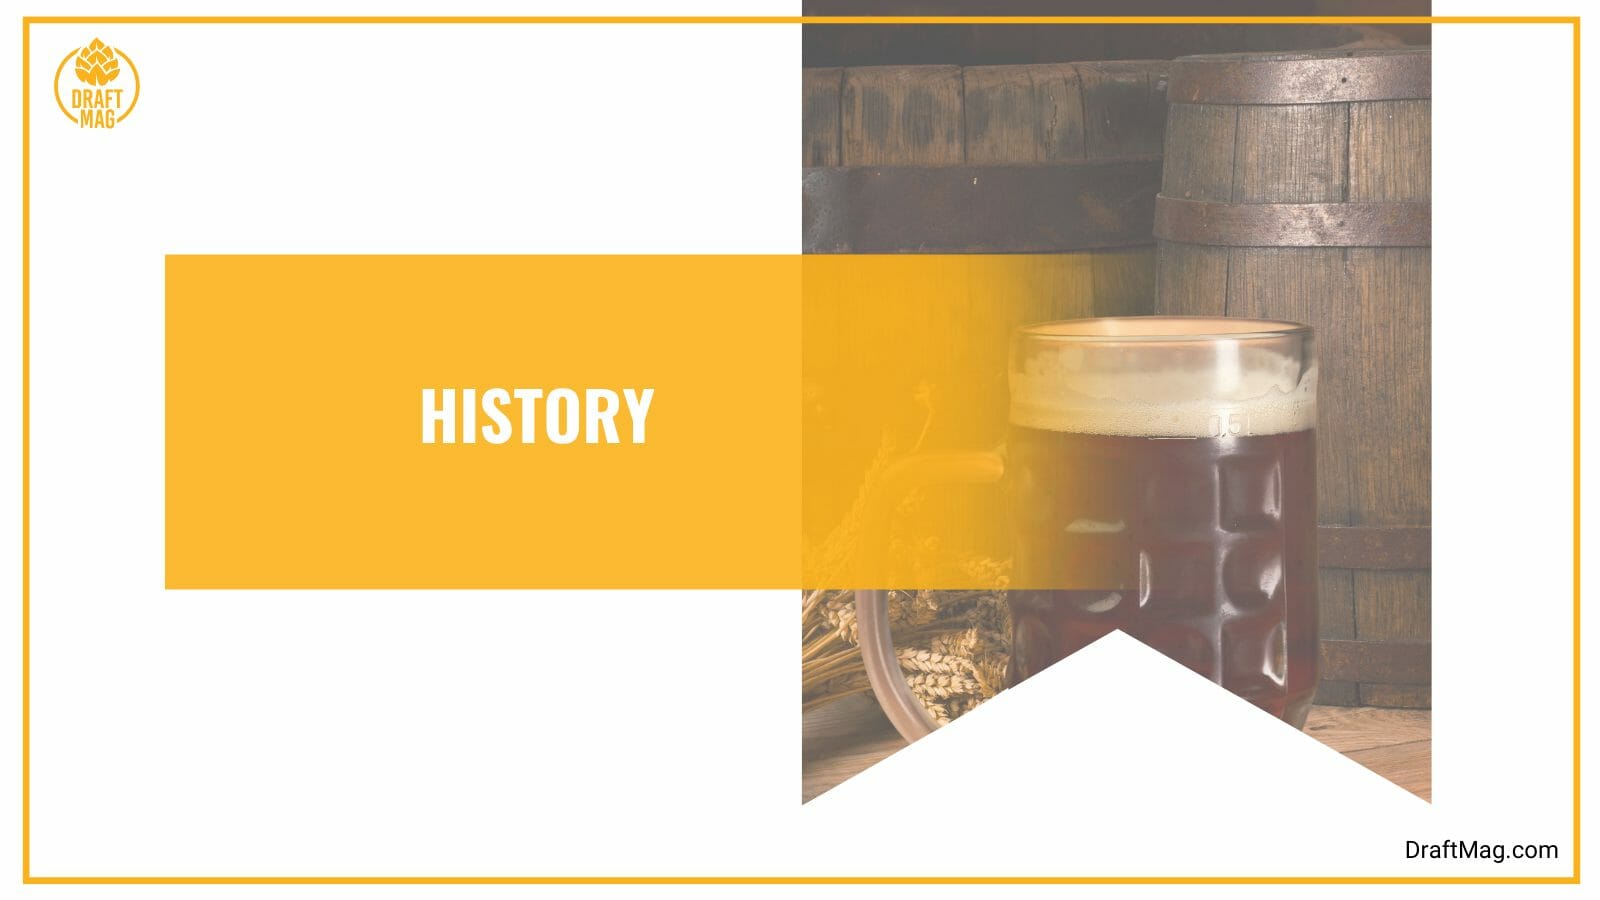 The origin of highland gaelic ale